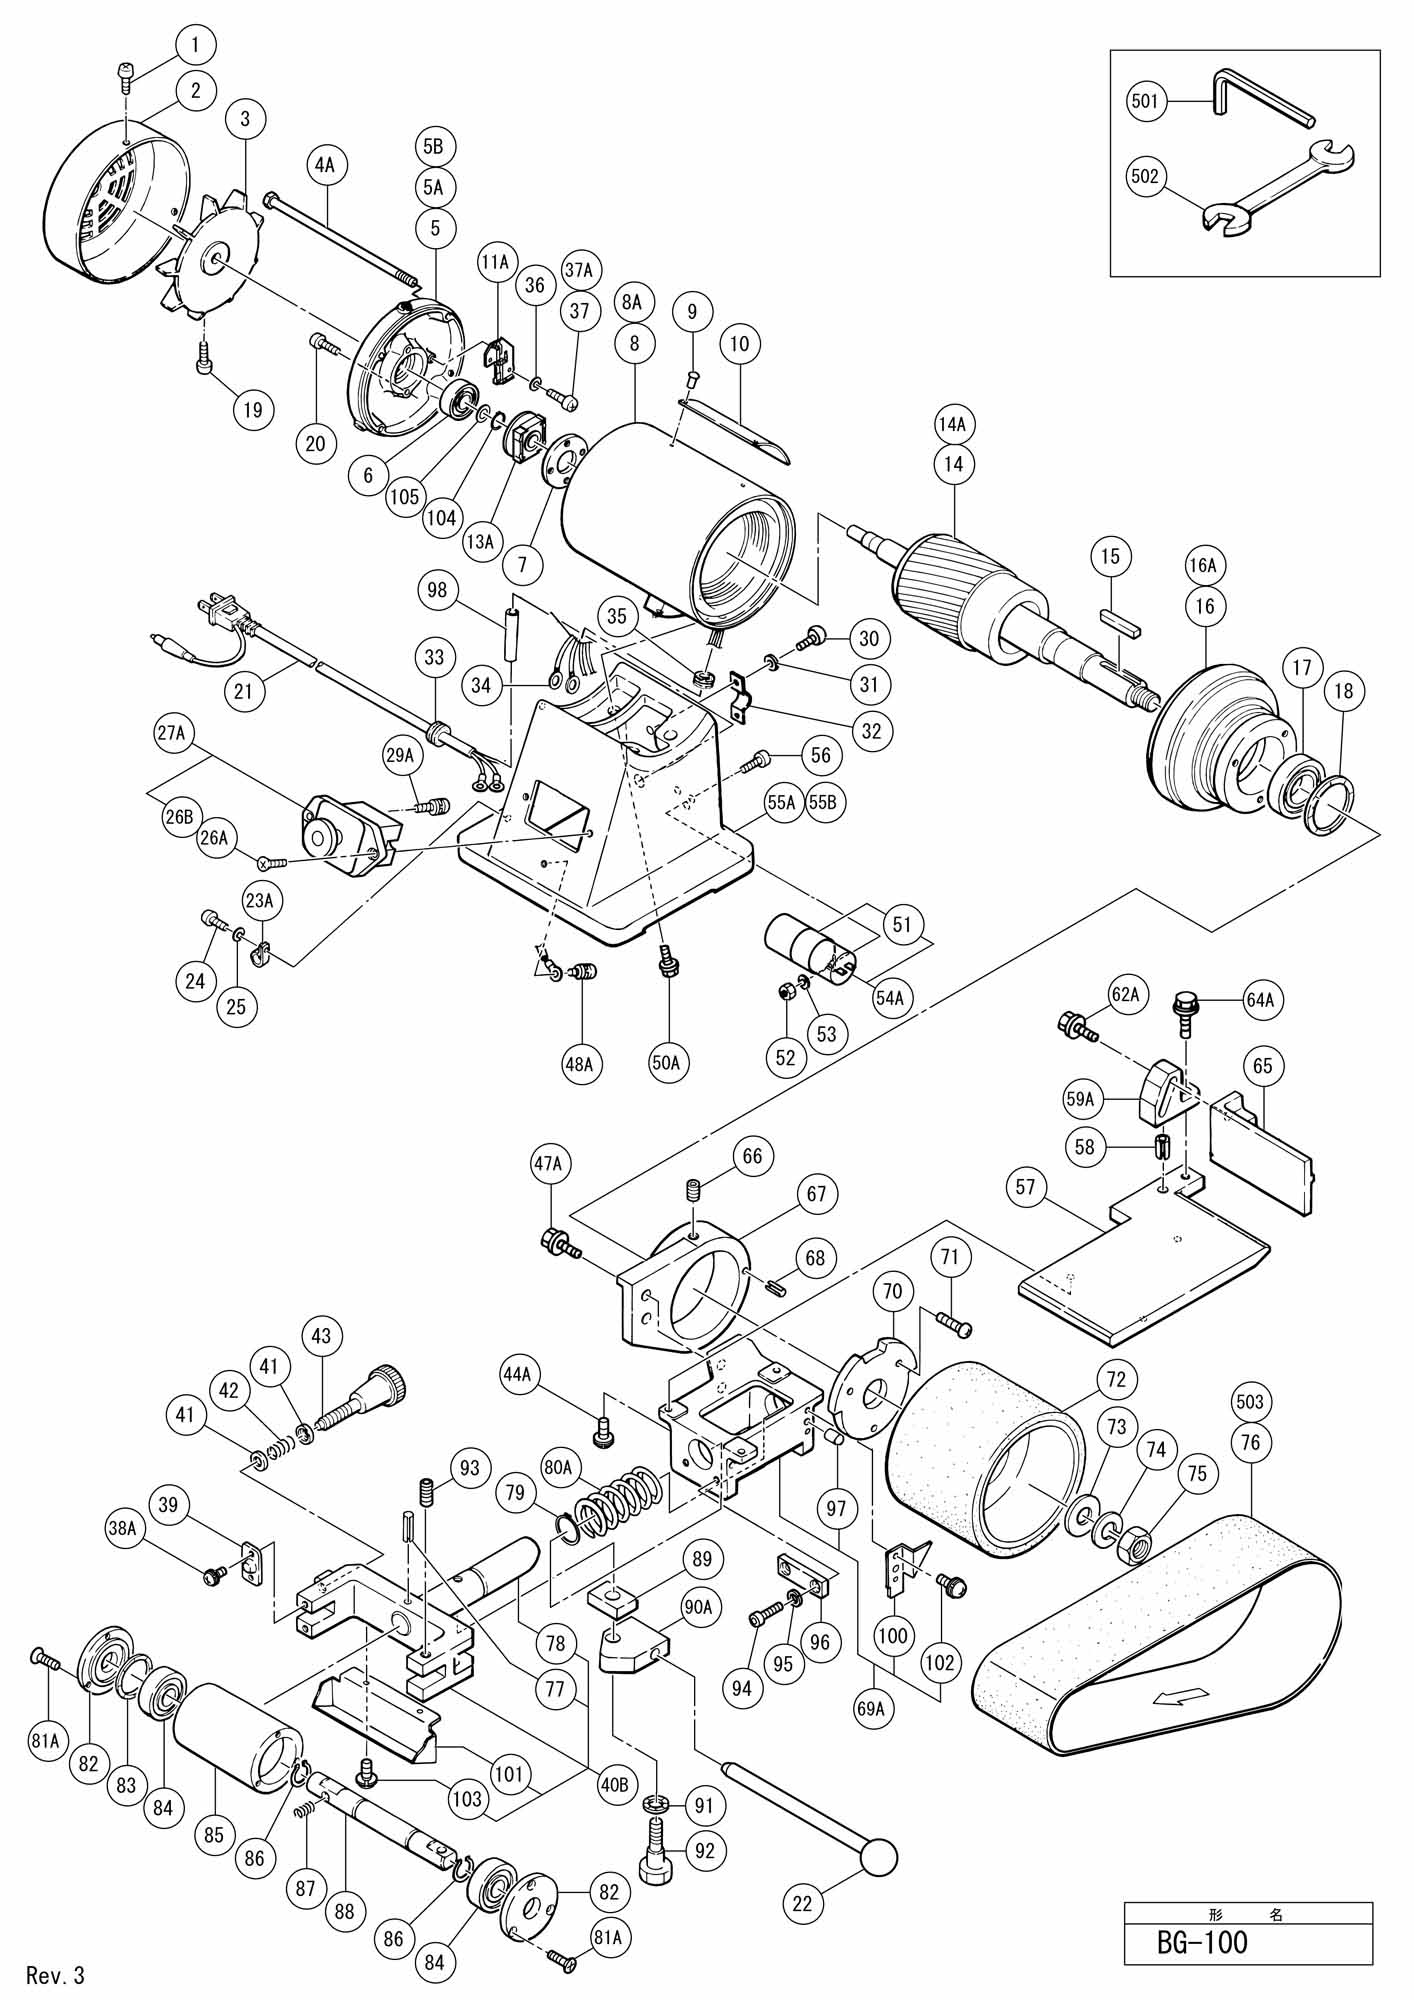 Hitachi Belt Grinder Bg-100 Spare Parts SPARE_BG-100 from Spare Parts World